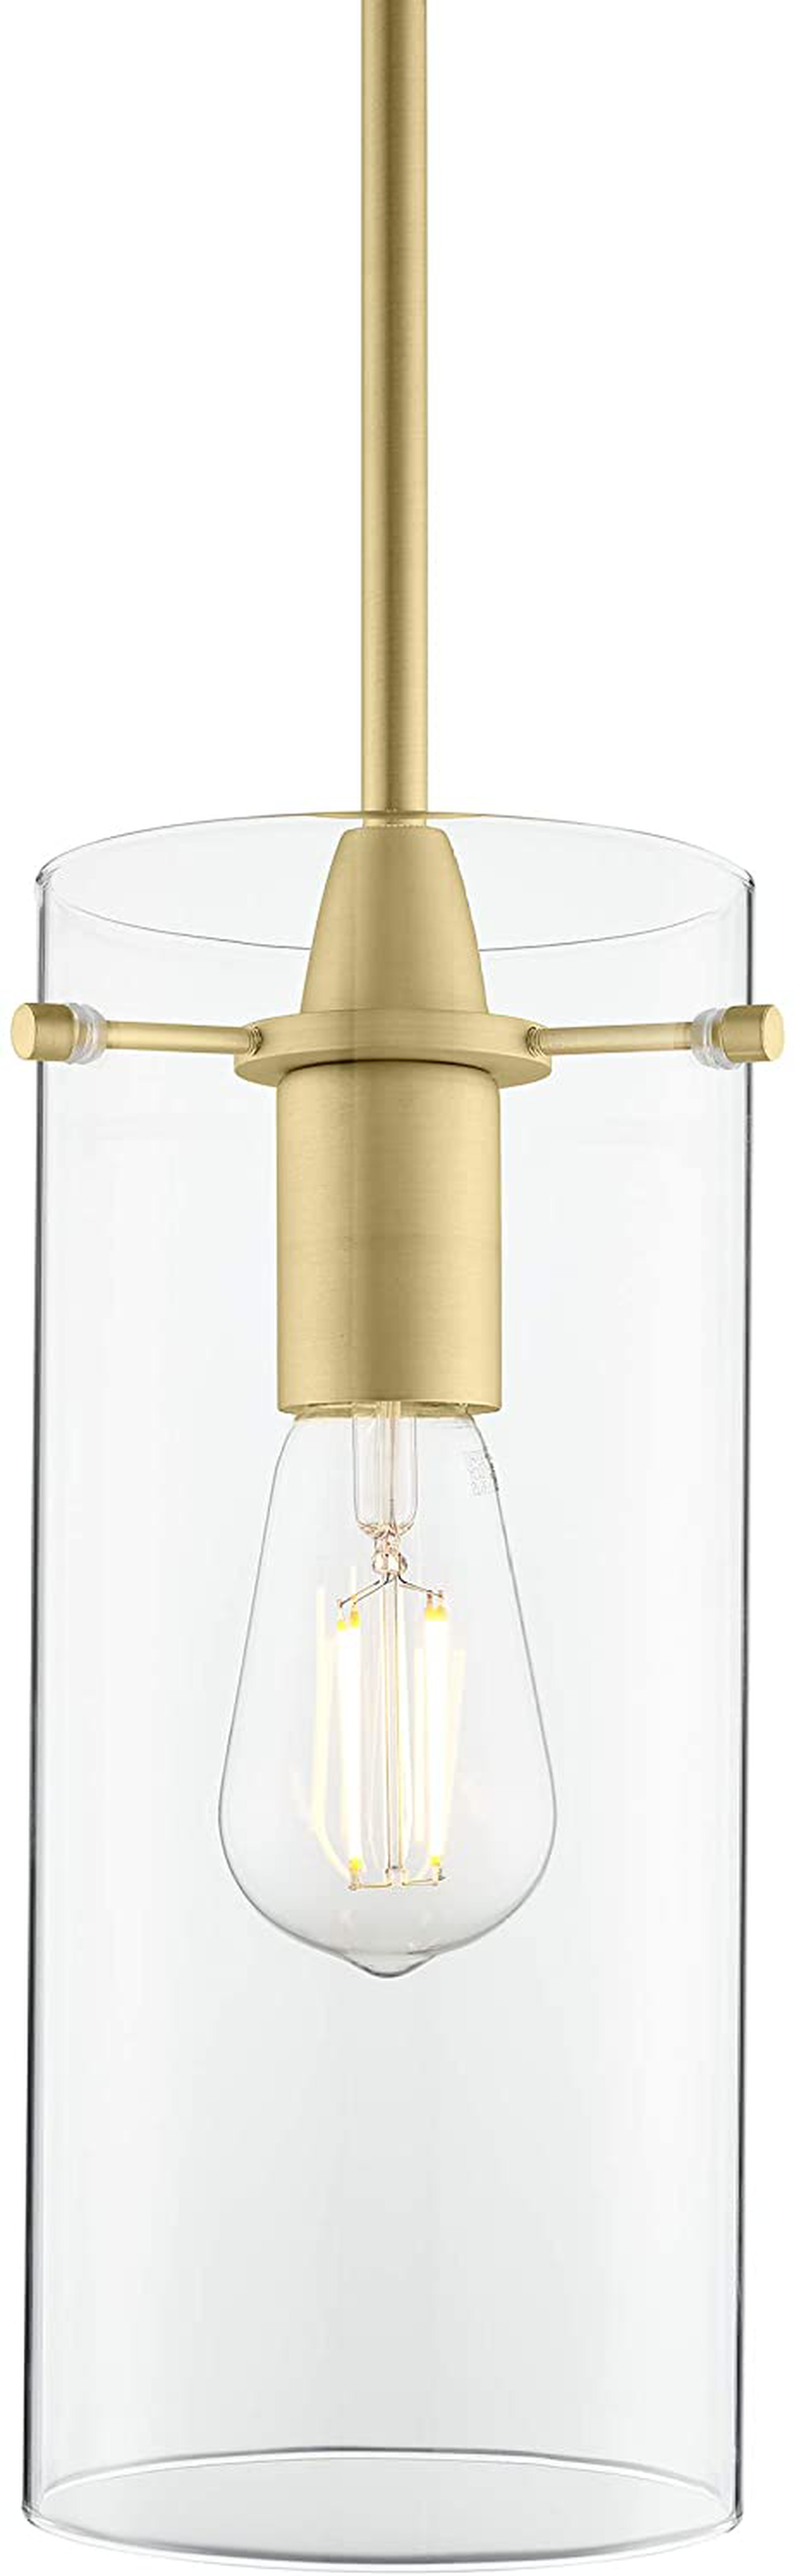 Gold Pendant Light - Modern Effimero Mini Pendant Lighting for Kitchen Island Decor - Clear Glass Fixture with Large Lamp Shade Home & Garden > Lighting > Lighting Fixtures Linea di Liara   